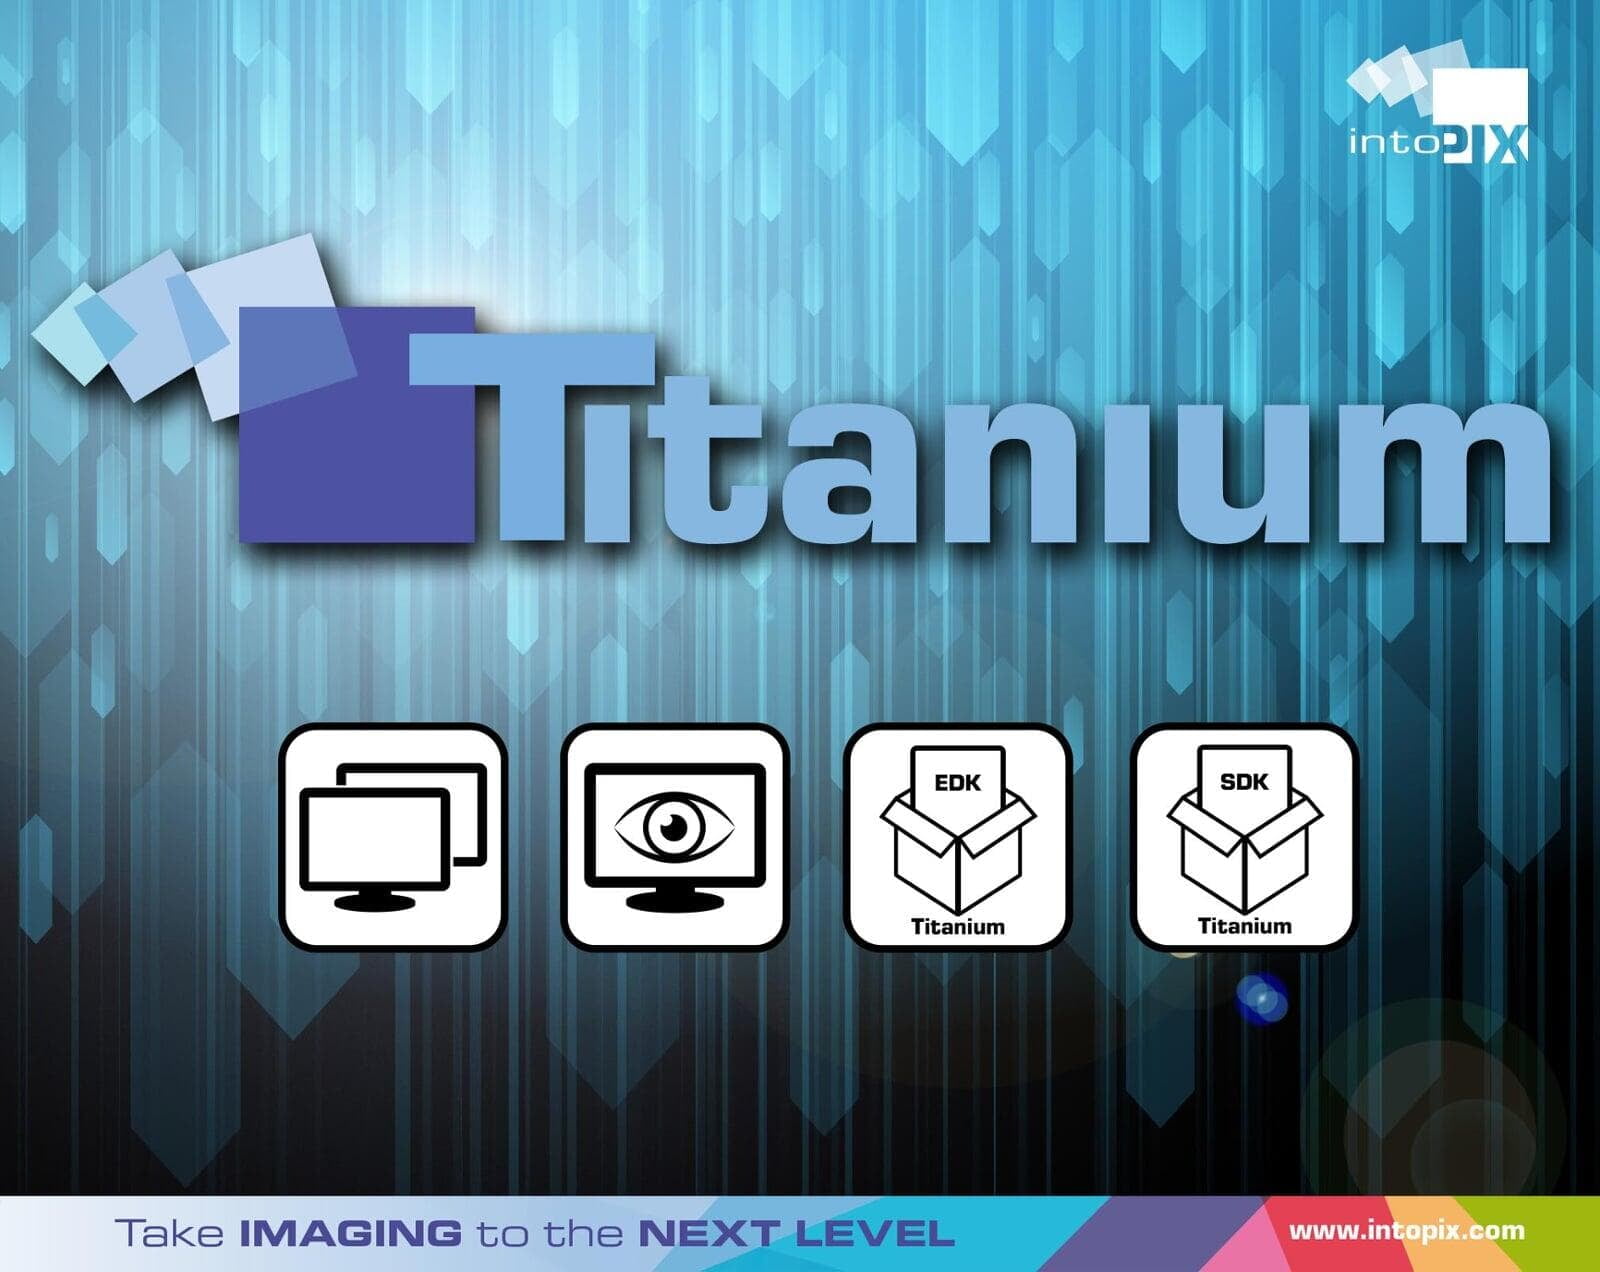 intoPIXは、NABでIPメディアワークフローを加速するTitaniumを発表